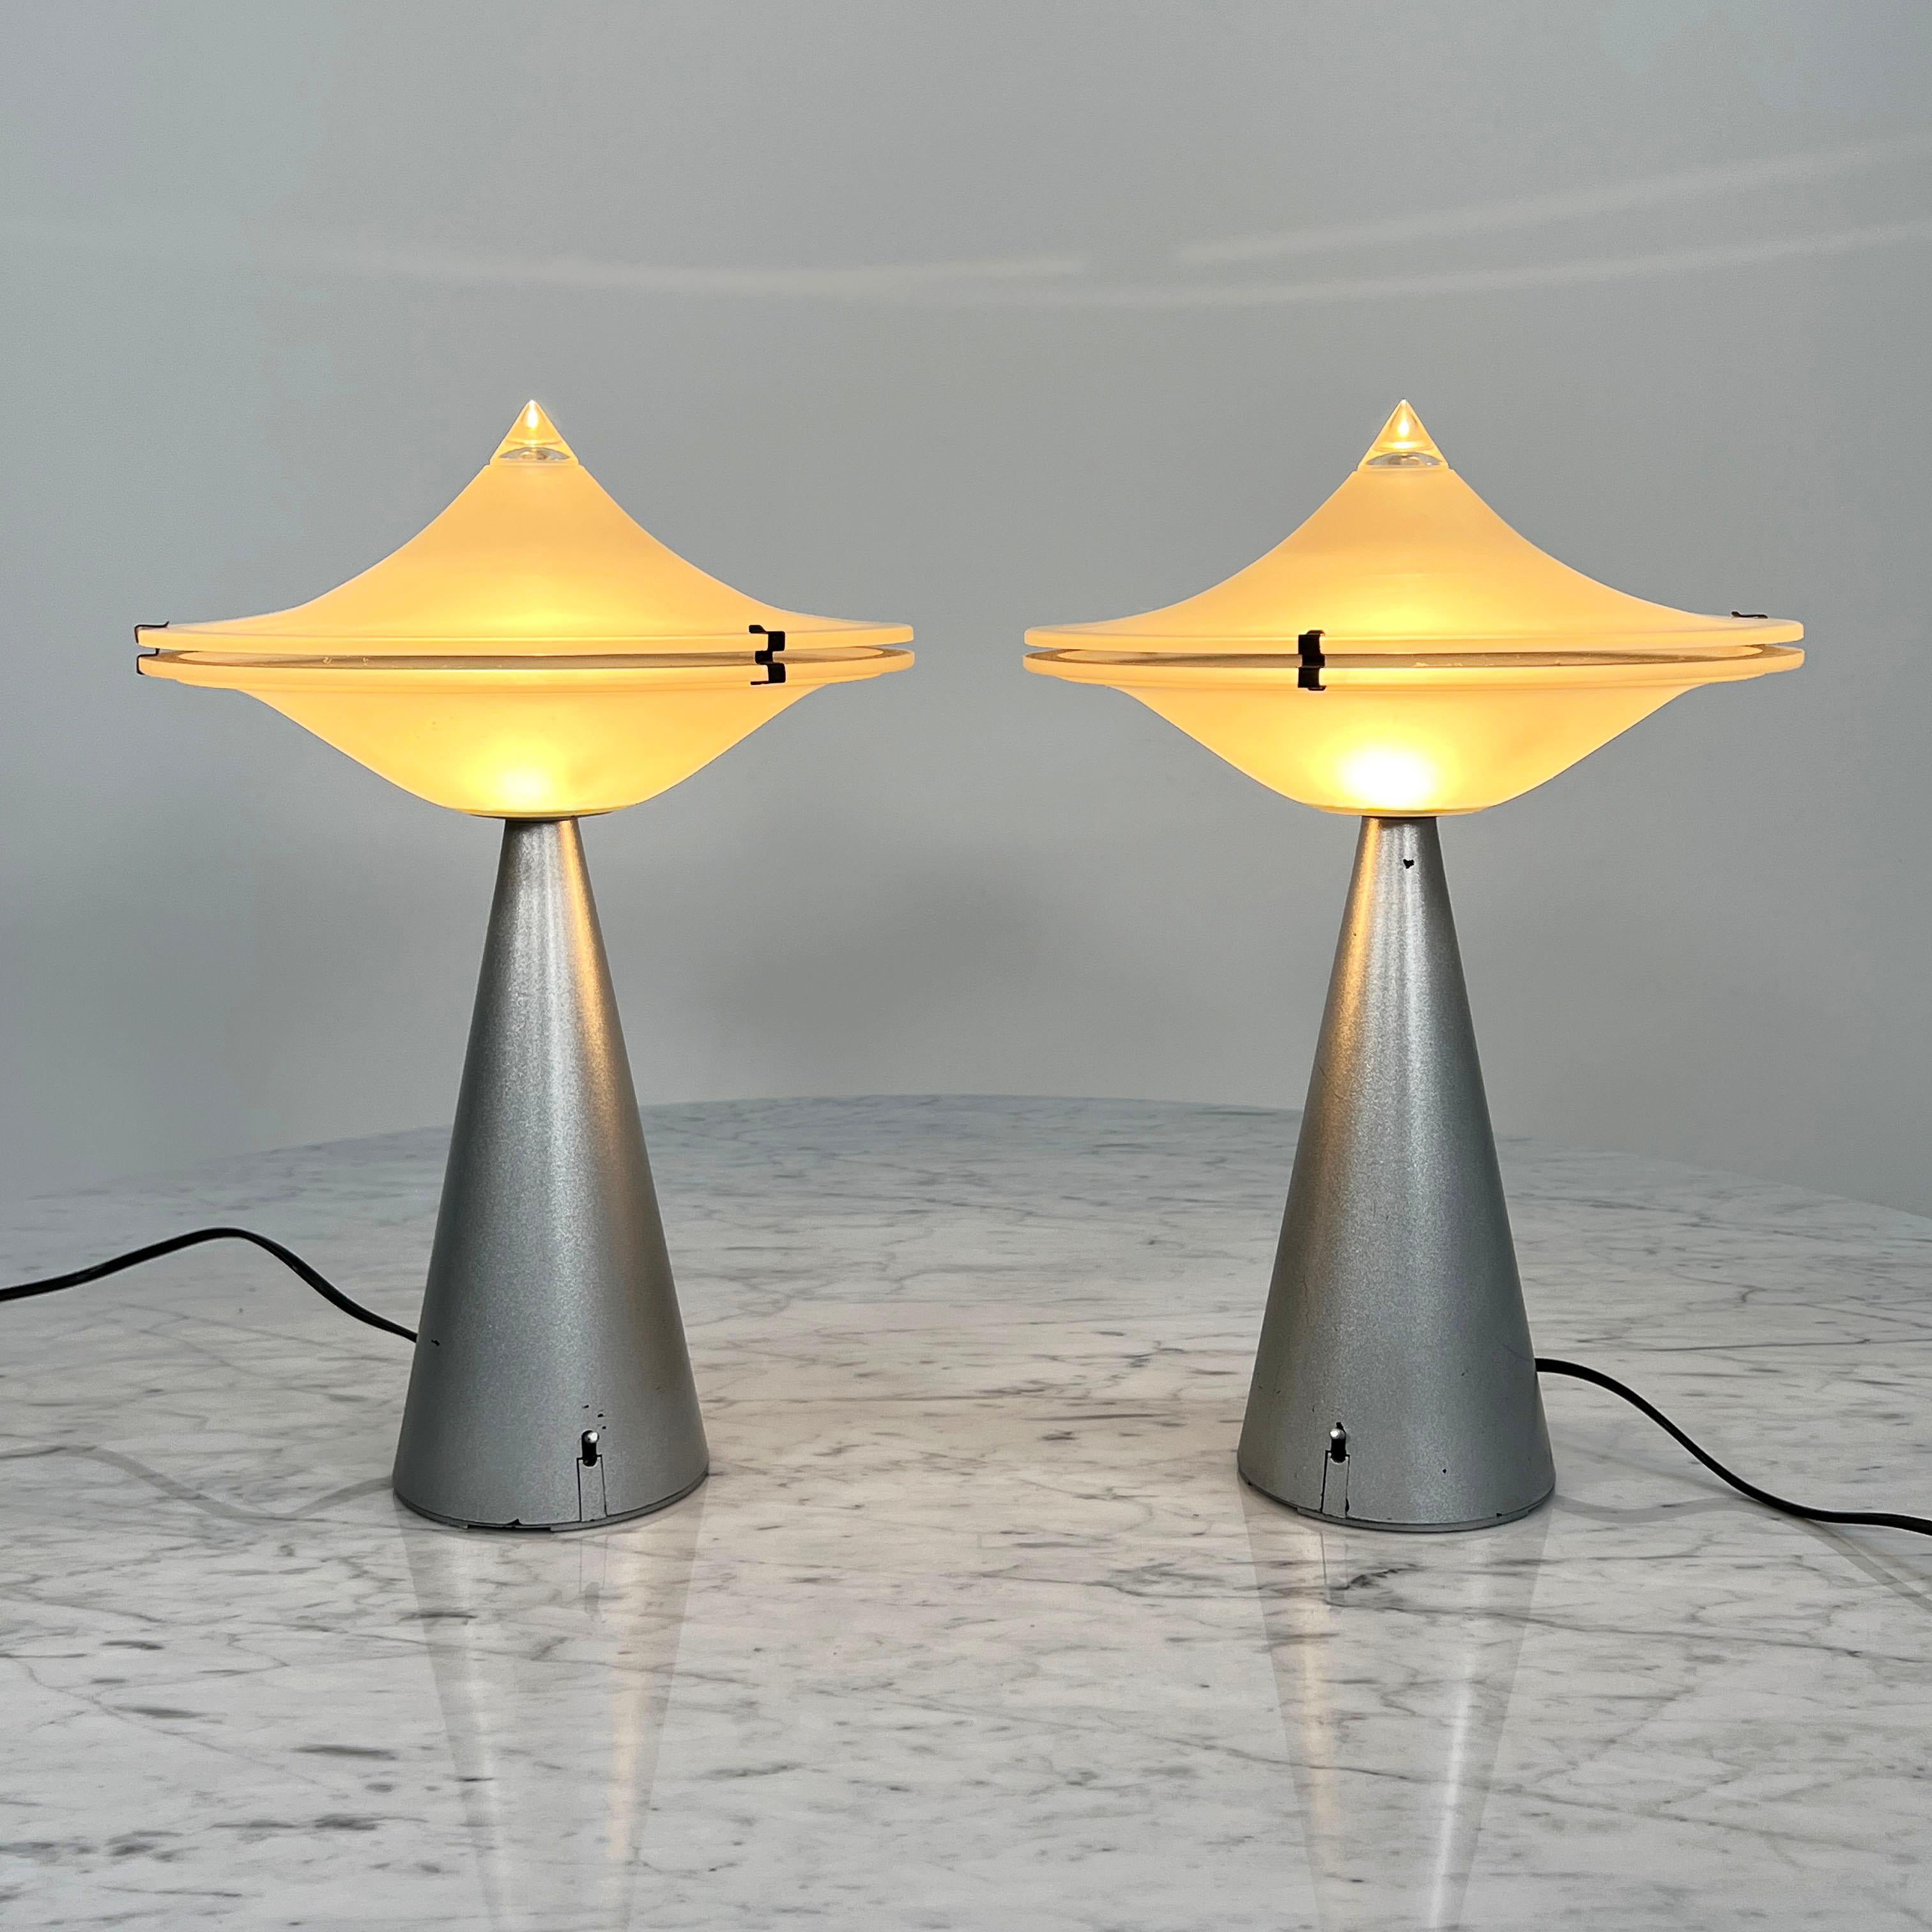 Designer - Cesare Lacca
Producer - Tre Ci Luce
Model - Alien Table lamp 
Design Period - Seventies
Measurements - Width 28 cm x Depth 28 cm x Height 40 cm
Materials - Metal, glass
Color - Grey, white.
  